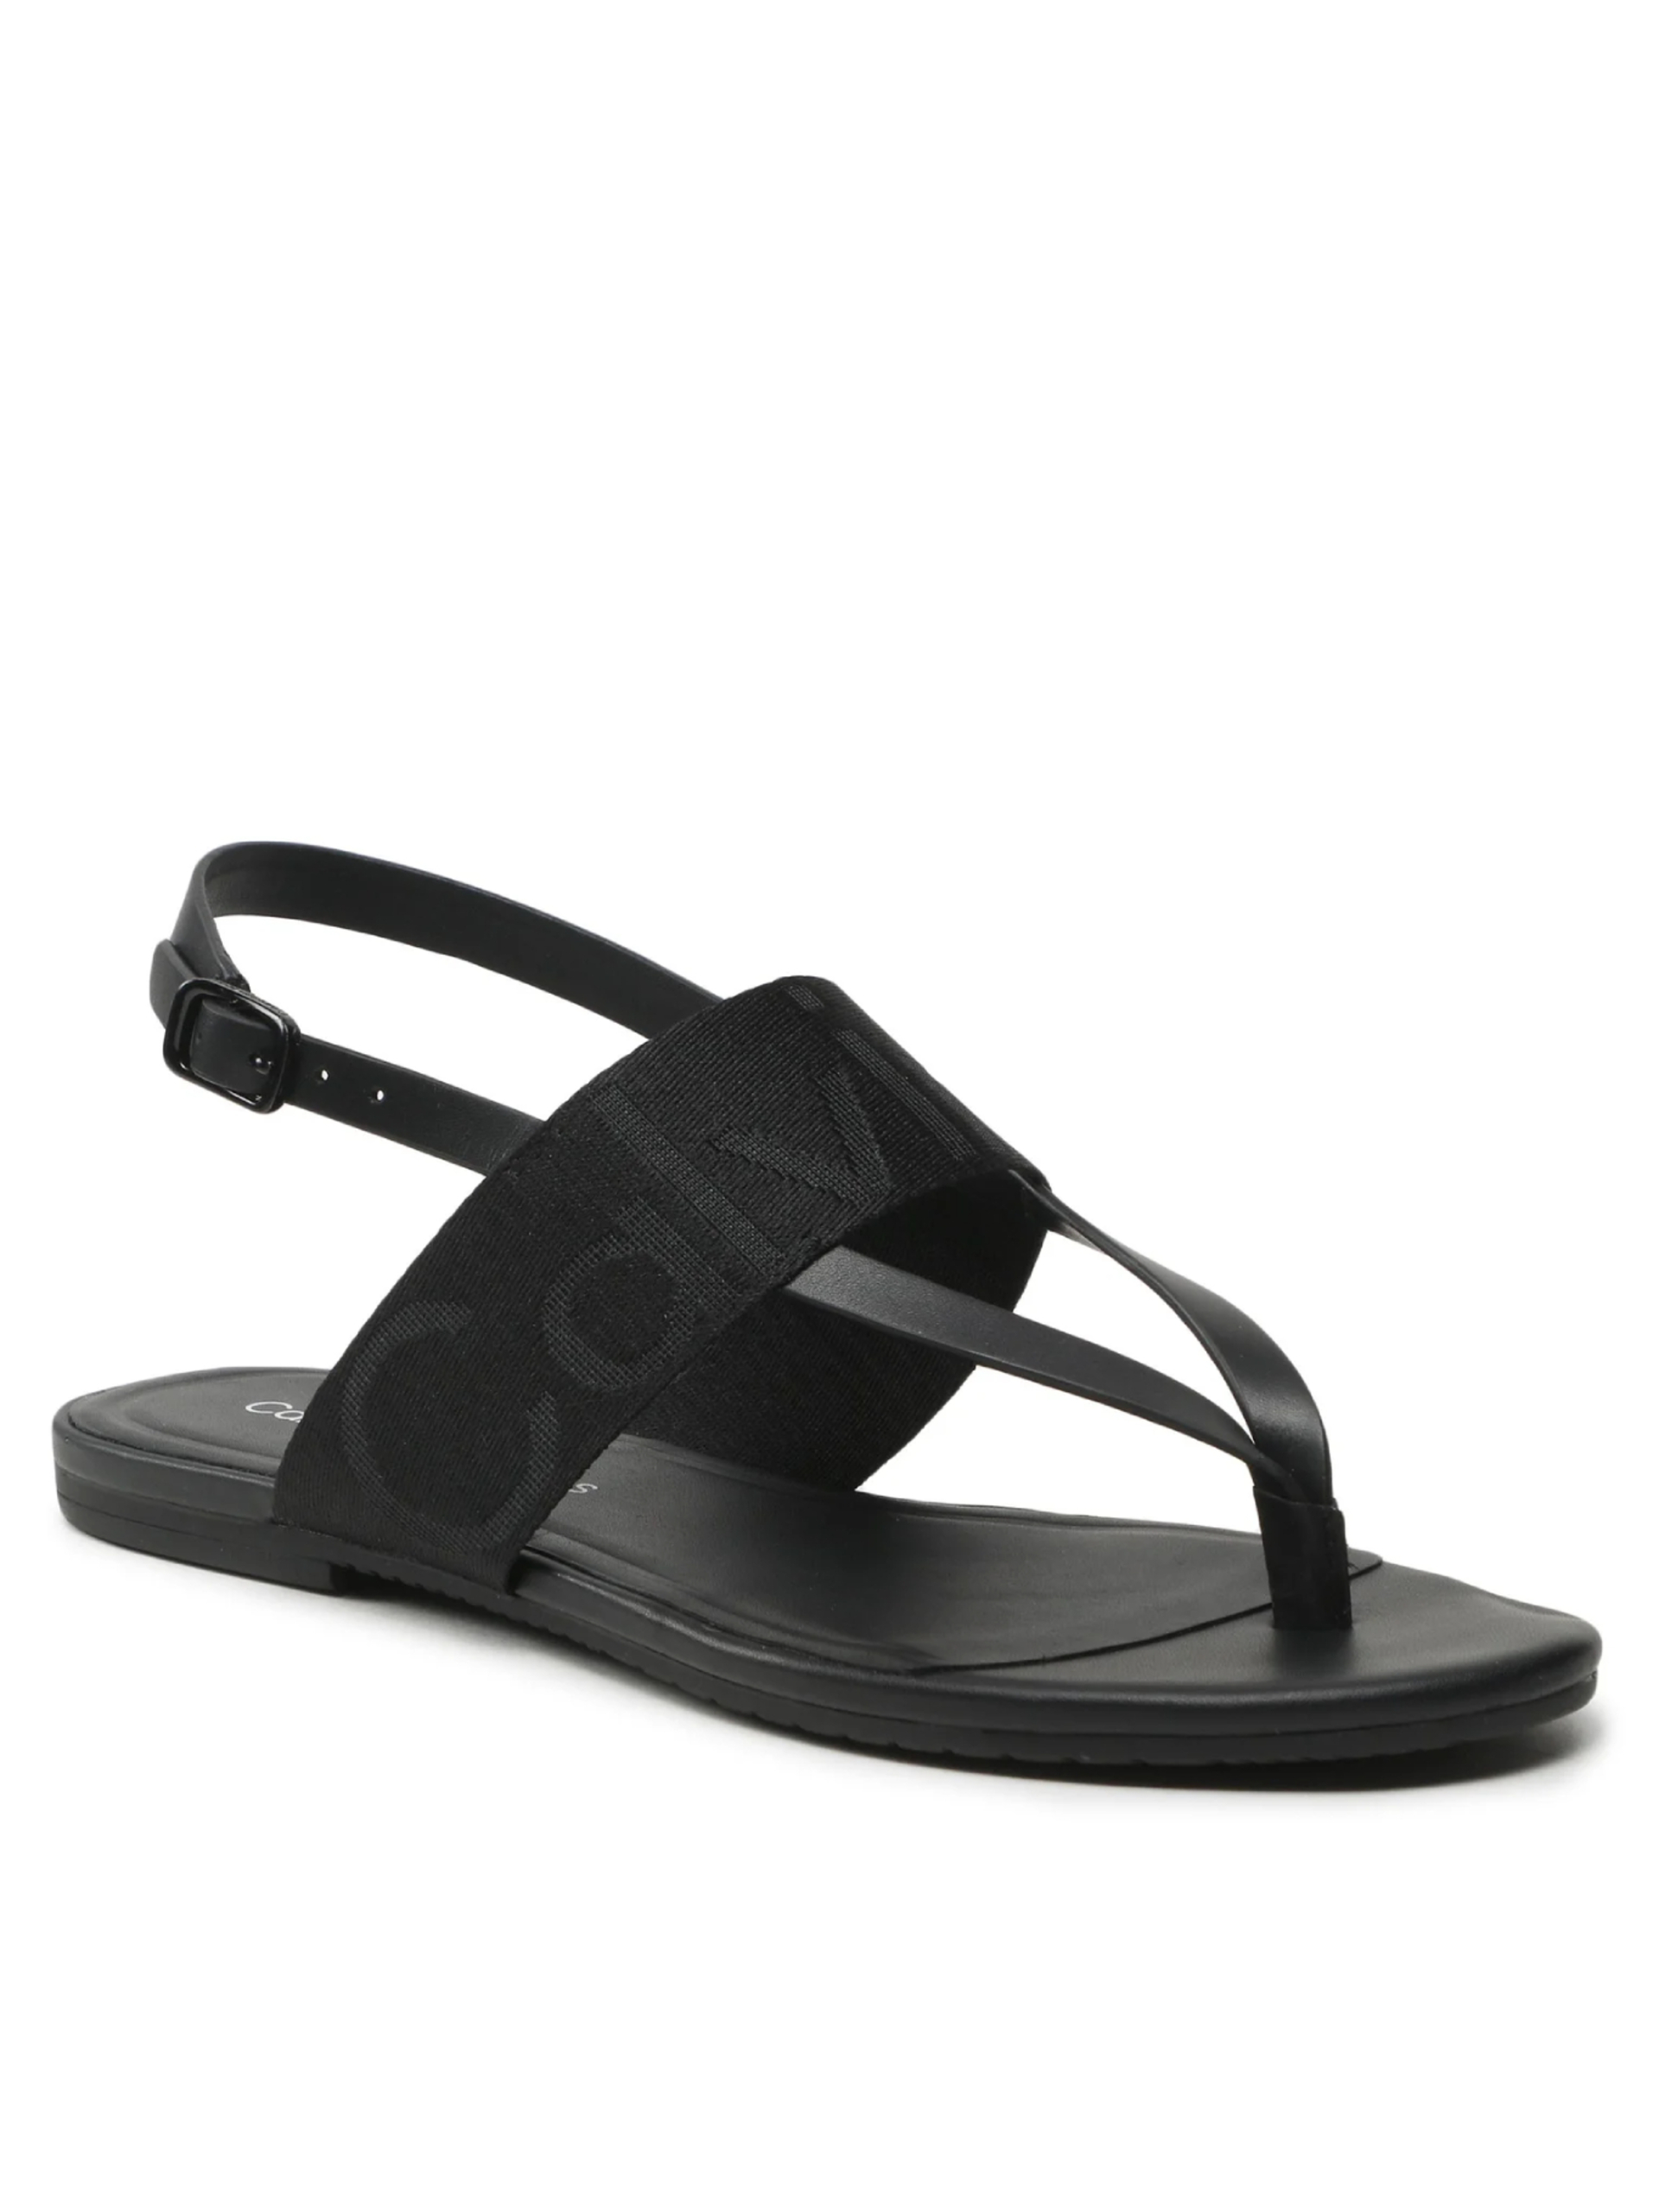 Calvin Klein dámské černé sandály FLAT SANDAL TOEPOST WEBBING - 41 (BDS)